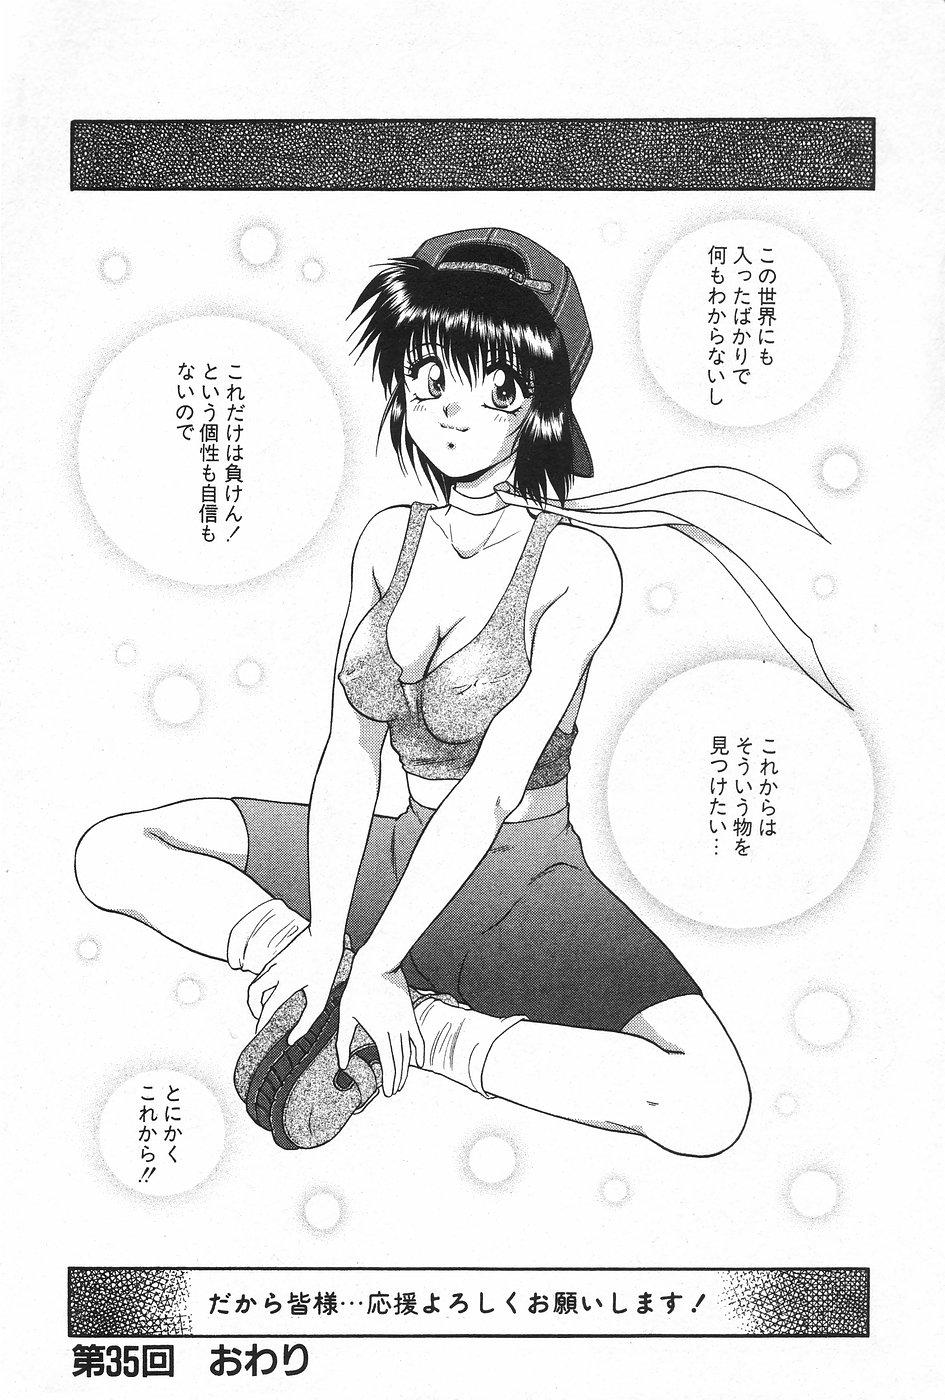 Manga Hotmilk 1997-04 151